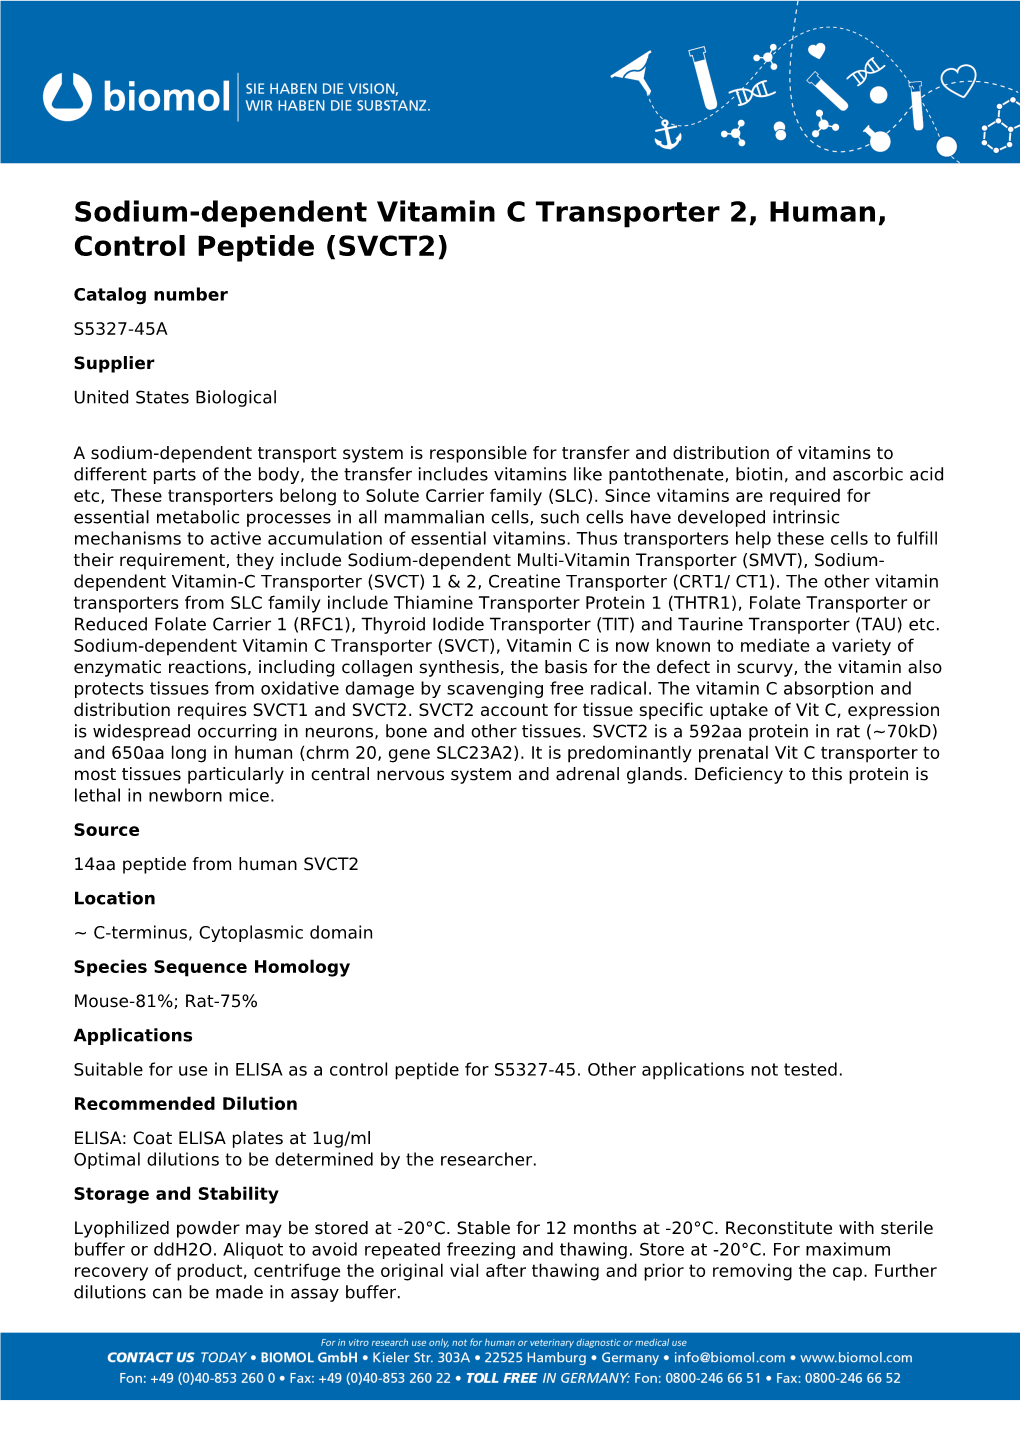 Sodium-Dependent Vitamin C Transporter 2, Human, Control Peptide (SVCT2)